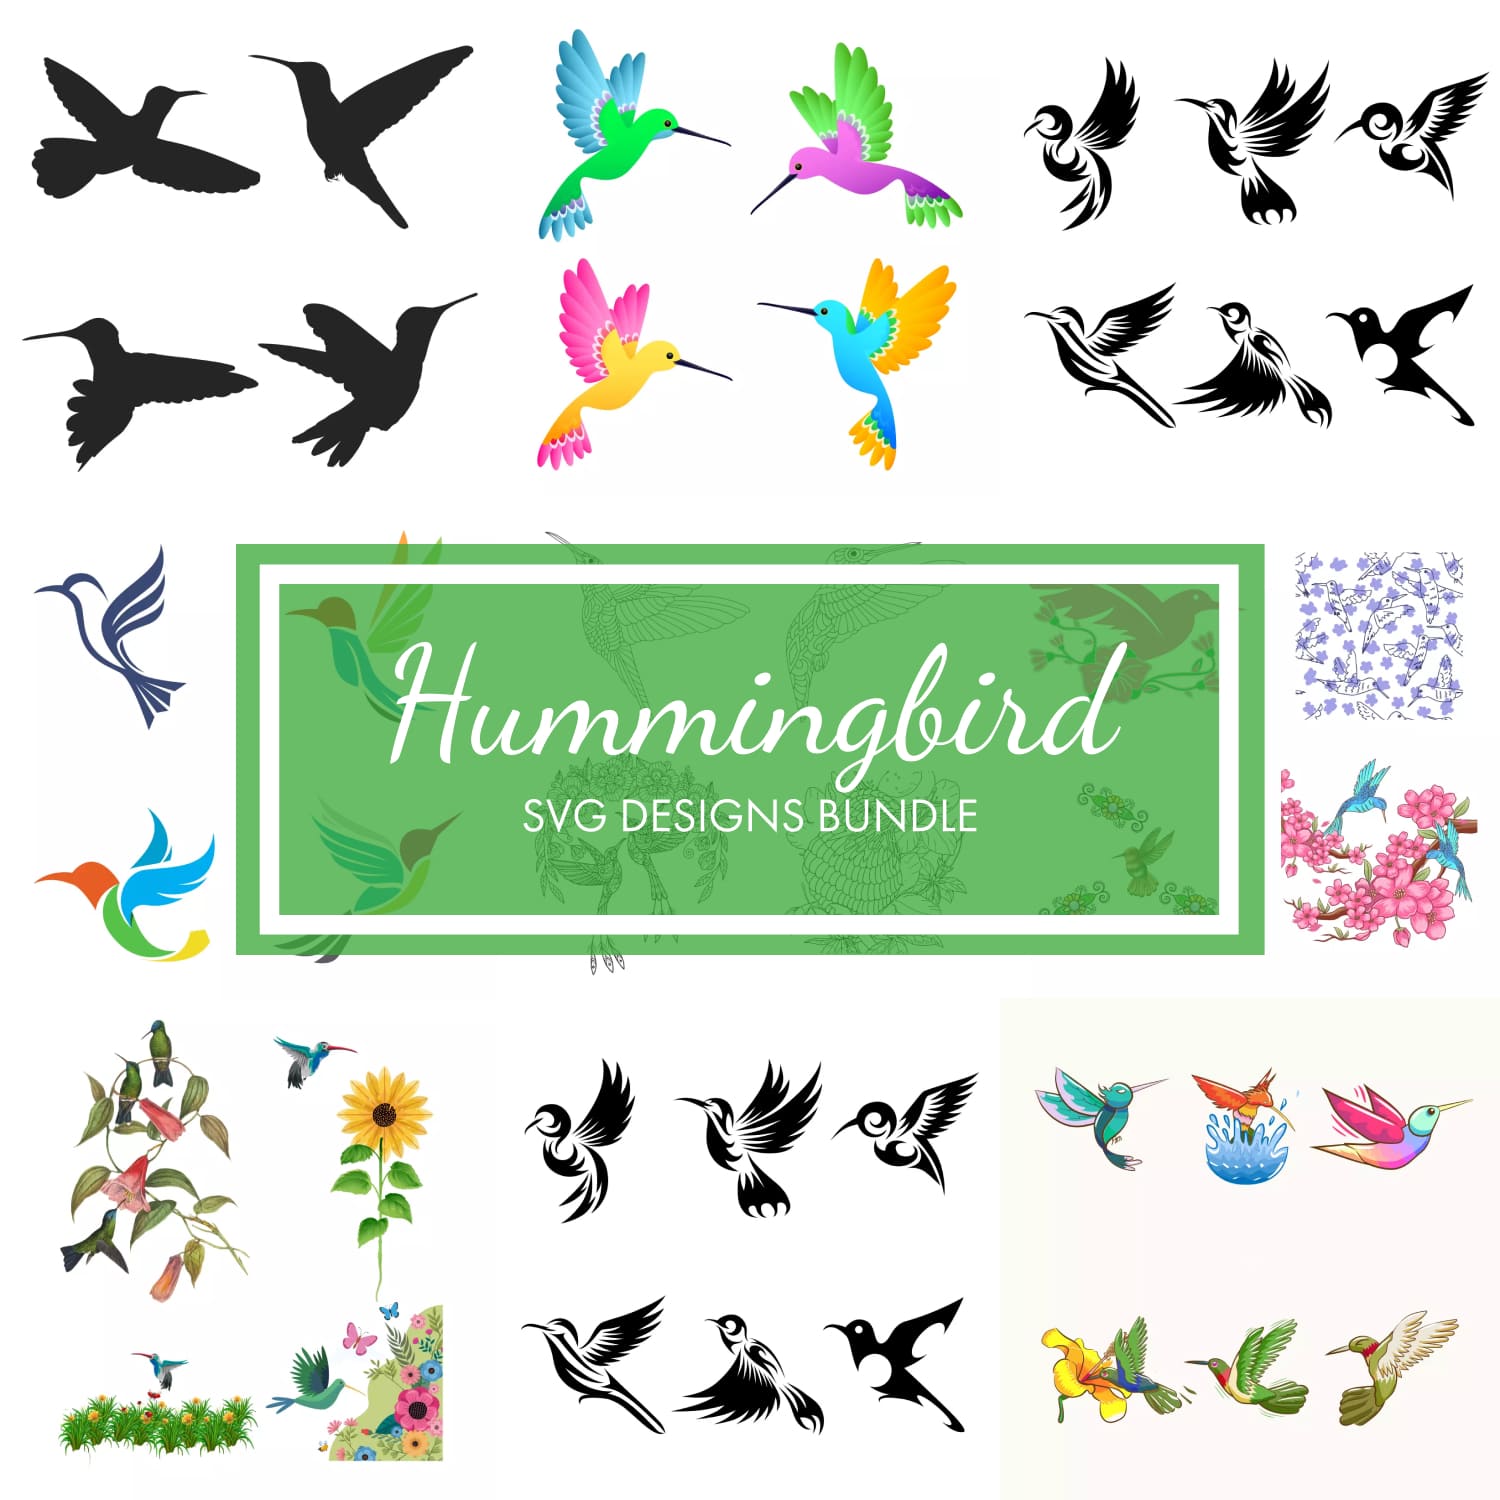 Hummingbird svg designs bundle.